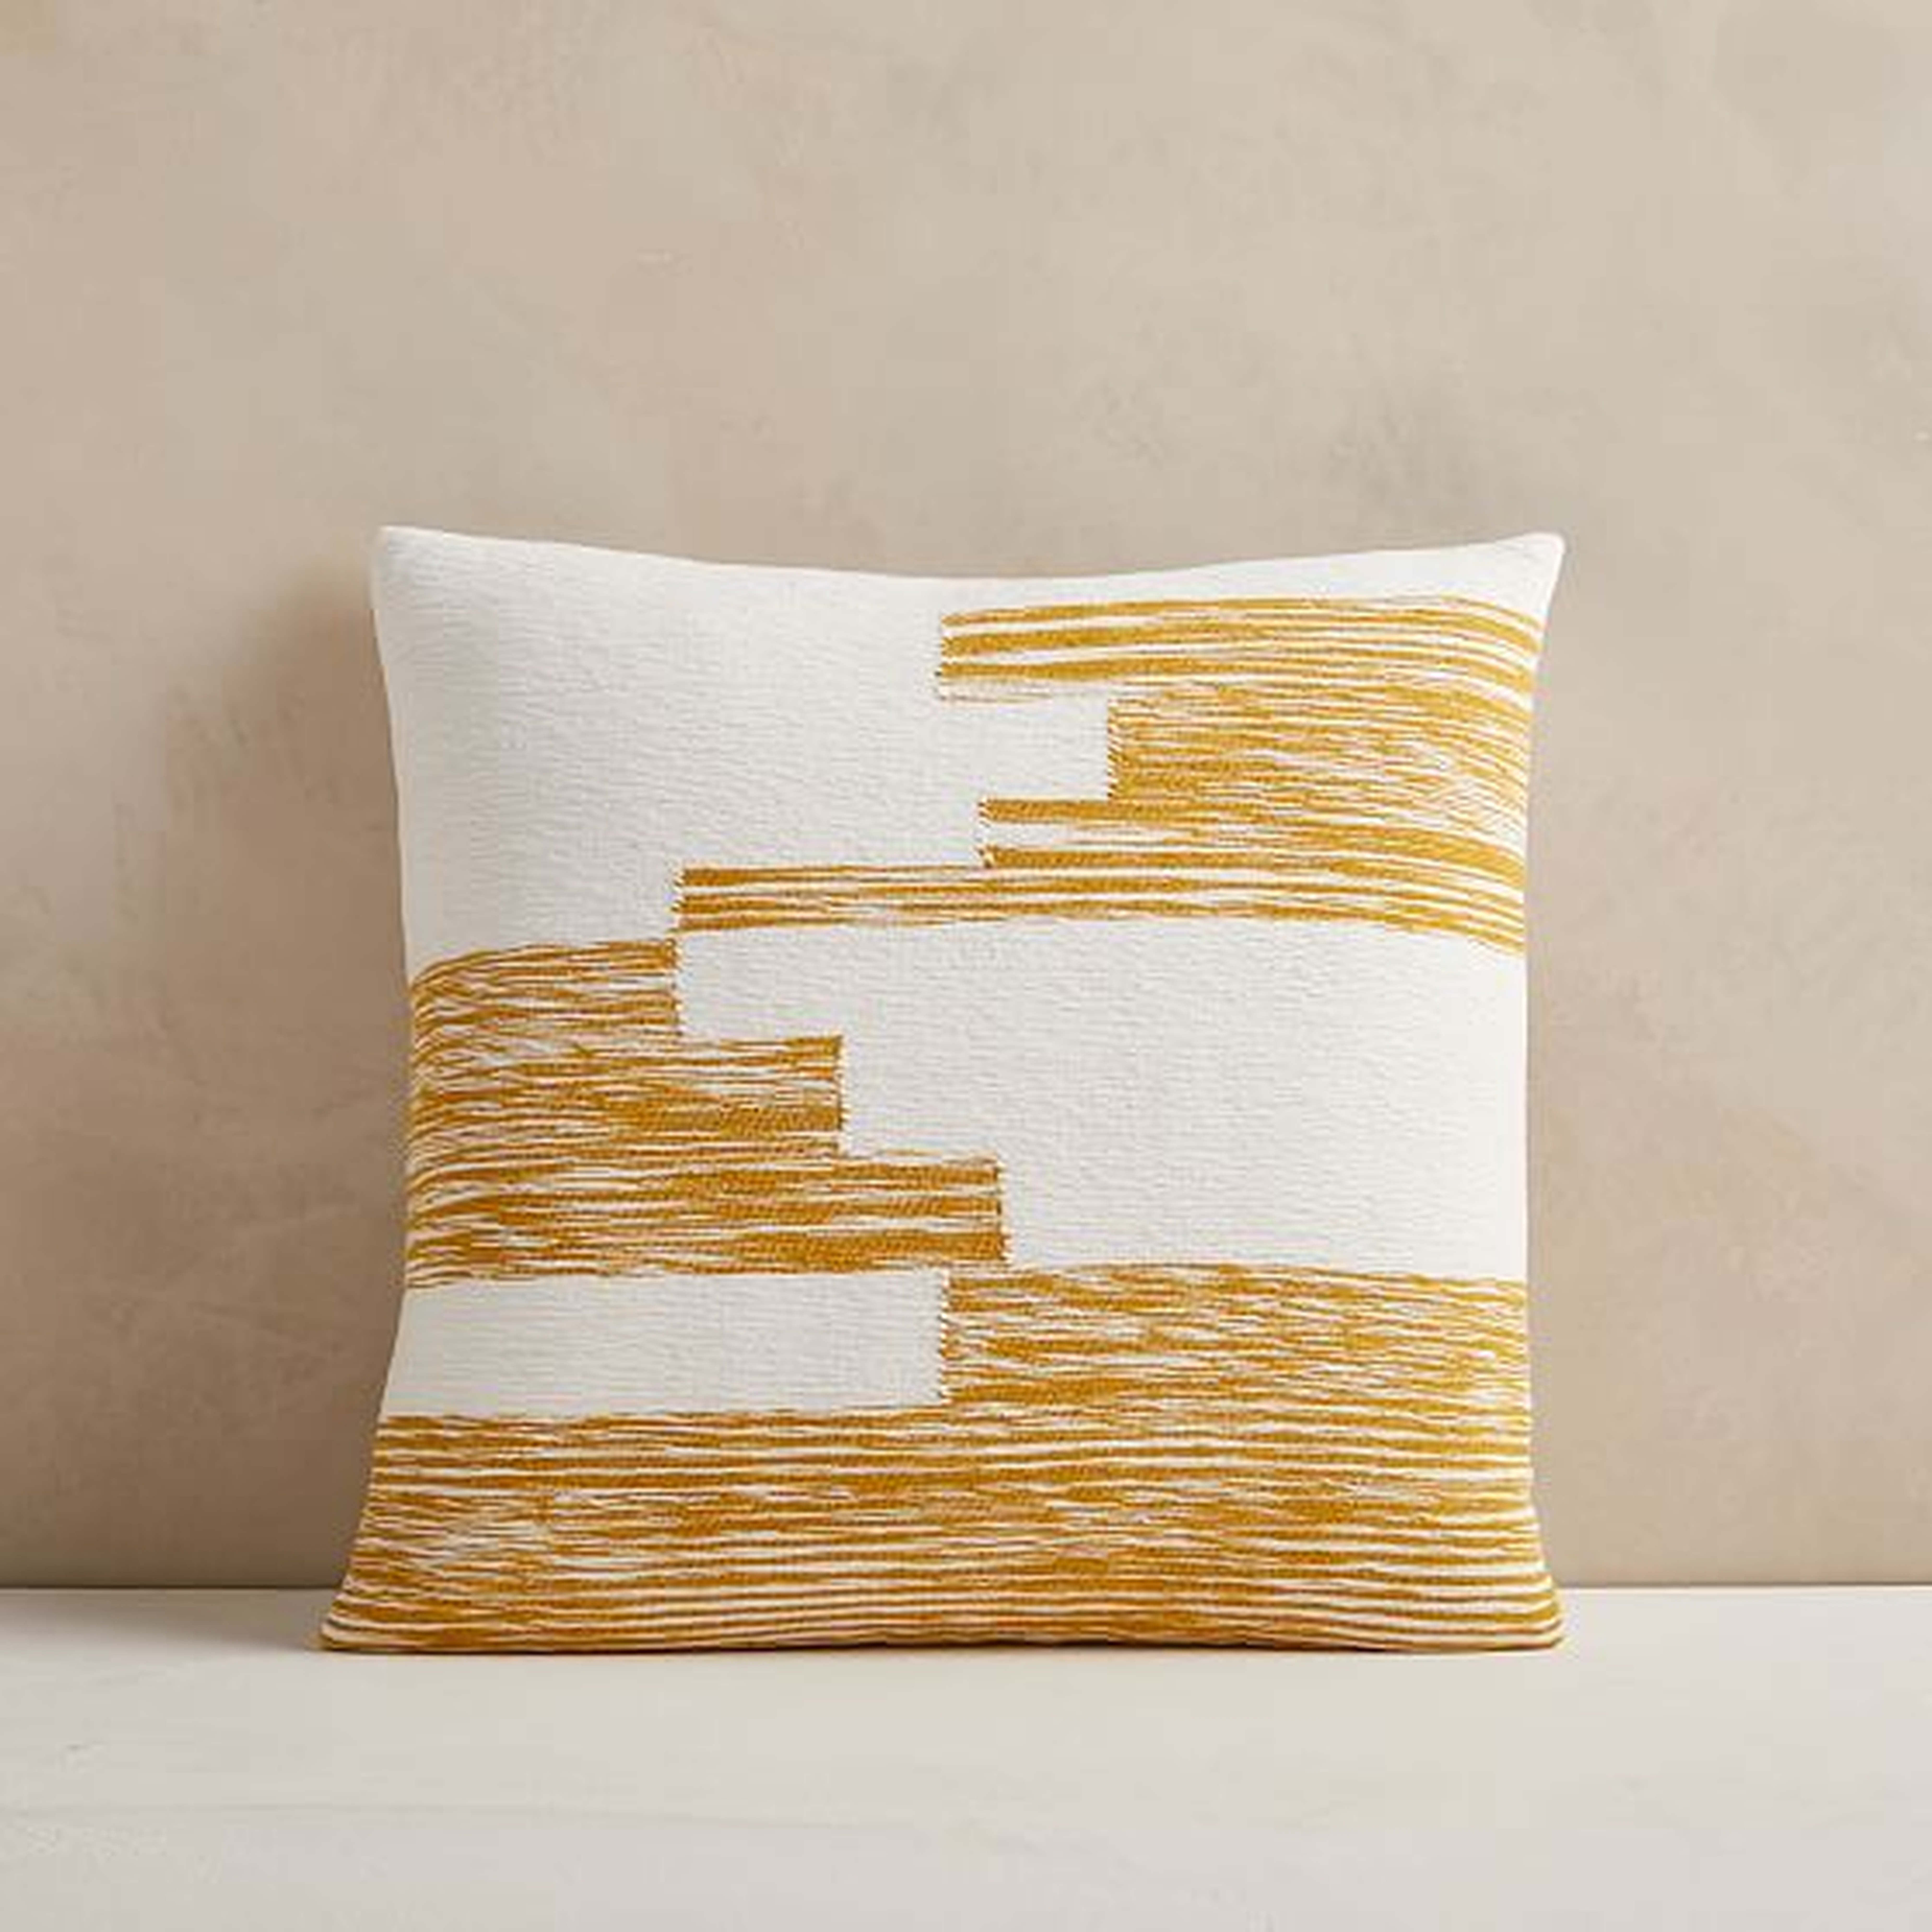 Cotton Variegated Colorblock Pillow Cover, 18" x 18", Dark Horseradish - West Elm